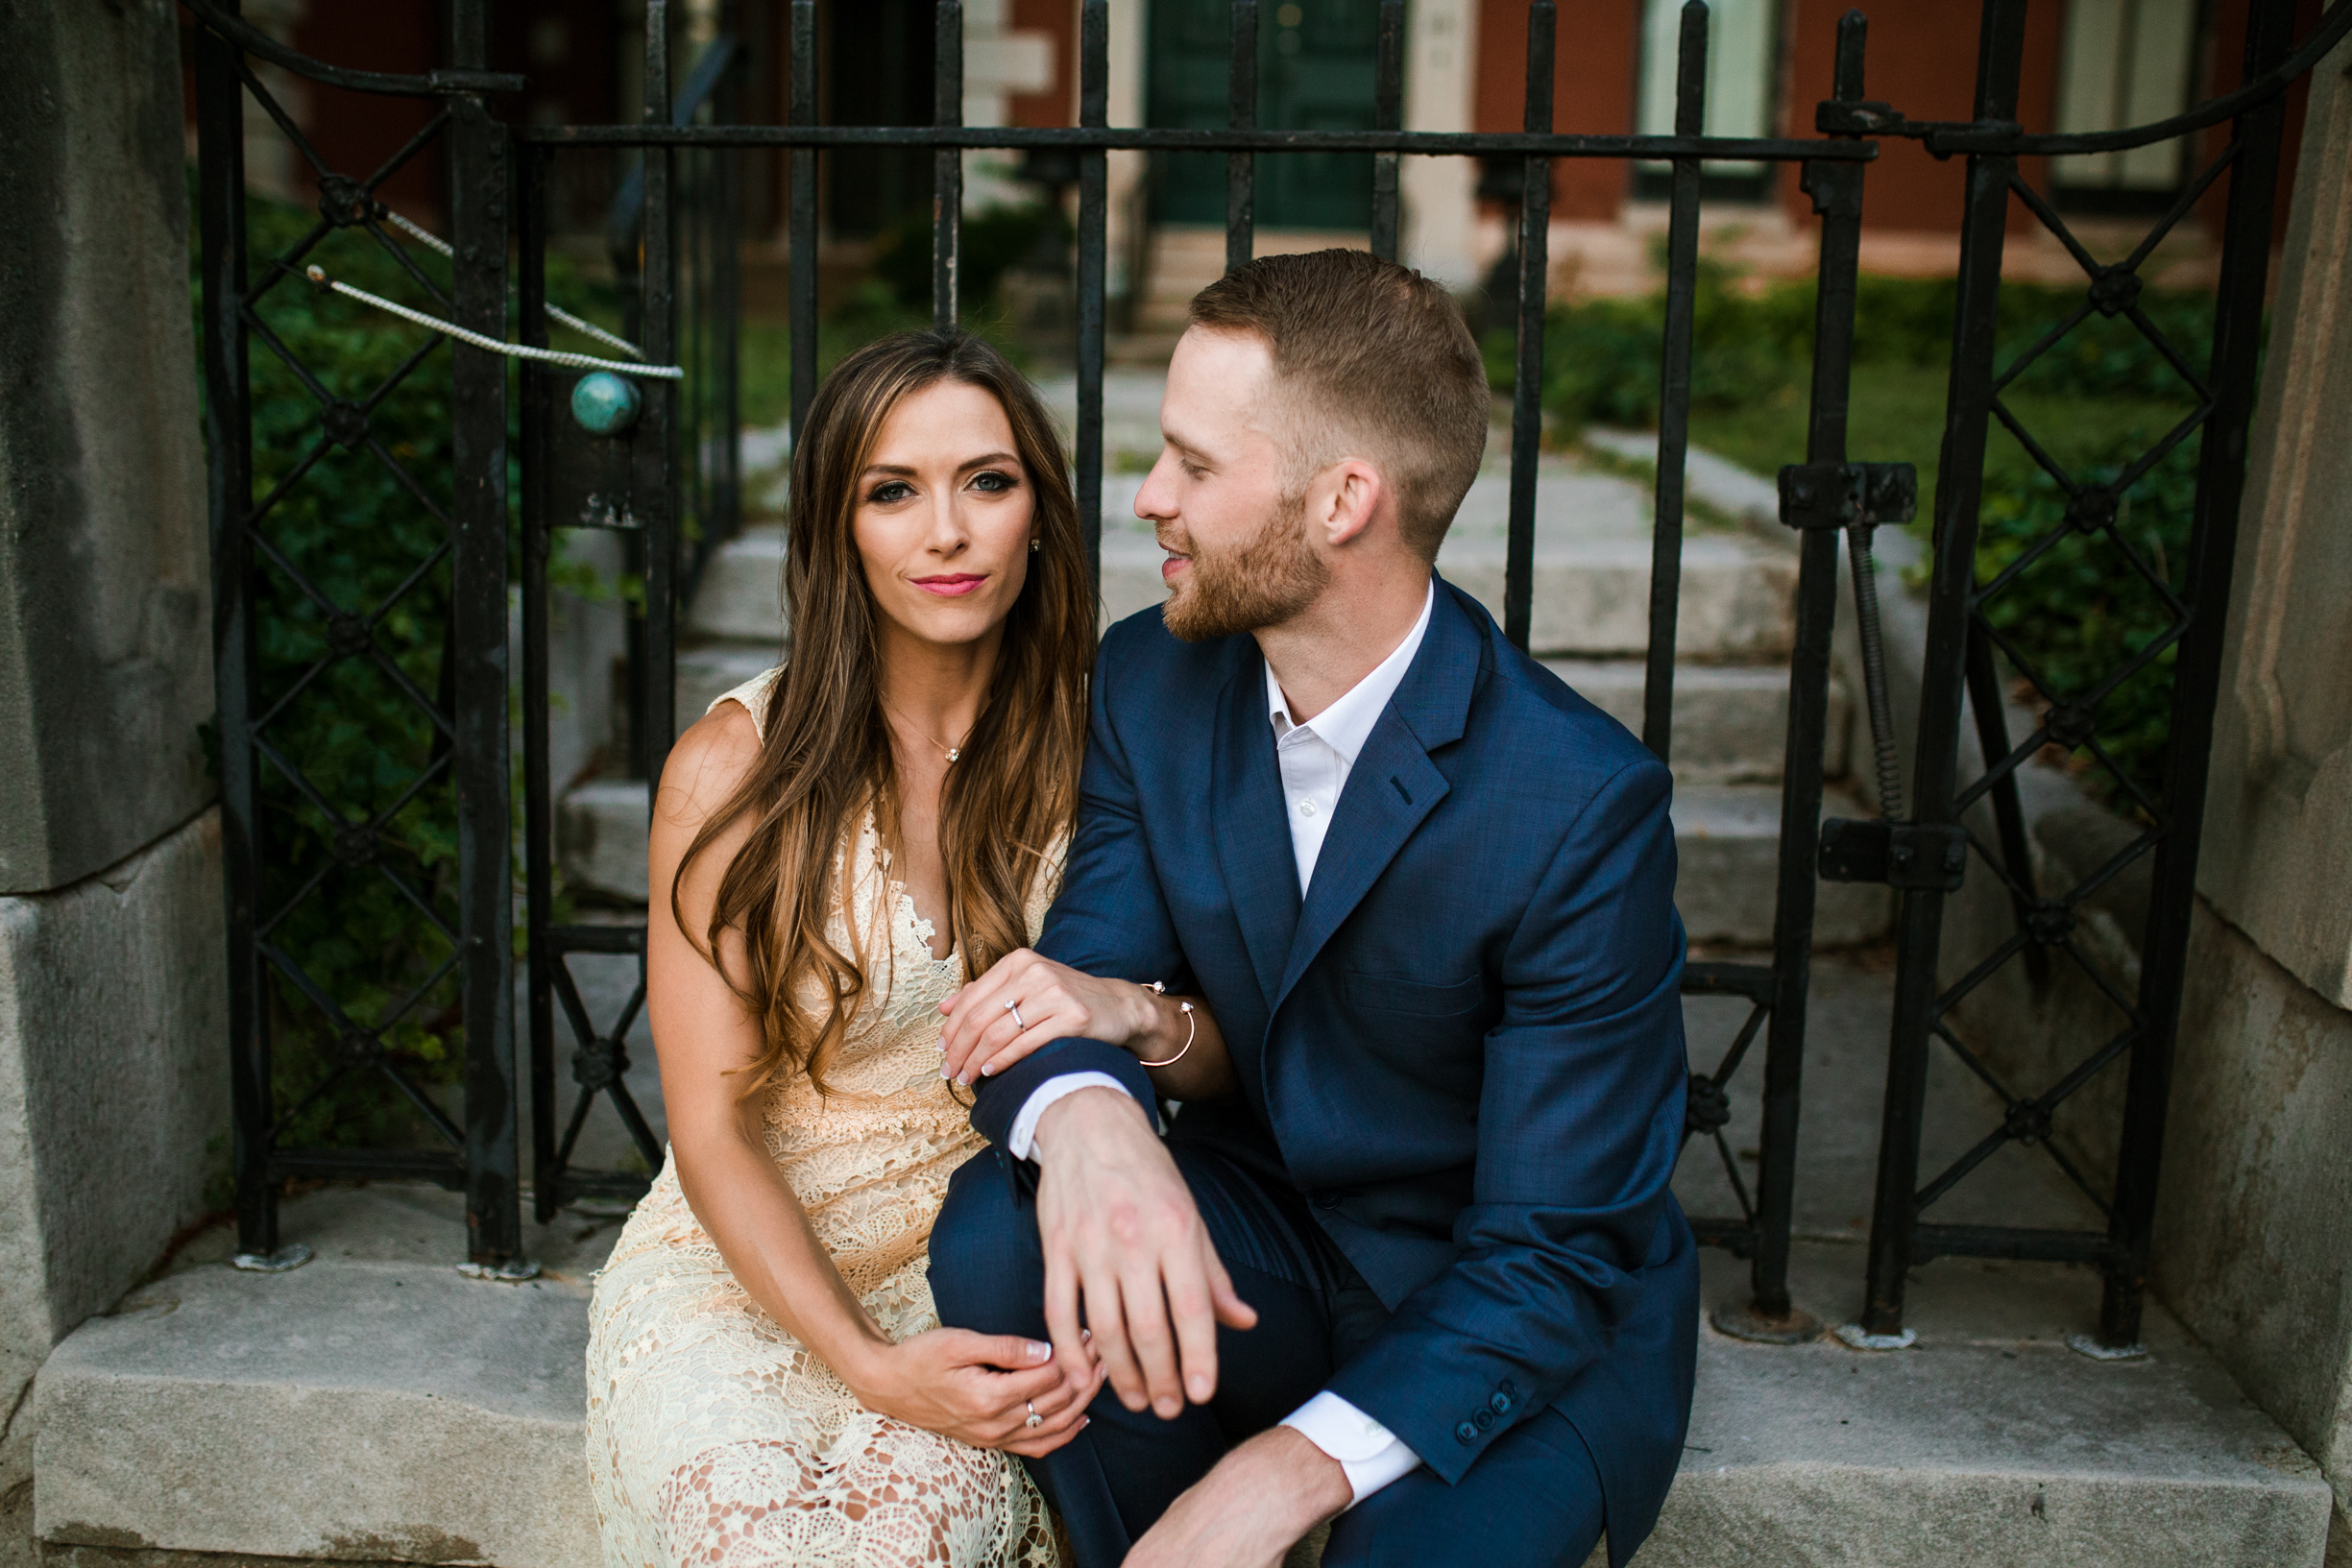 Victoria & Chad Engagement 2018 Crystal Ludwick Photo Louisville Kentucky Wedding Photographer WEBSITE (6 of 48).jpg